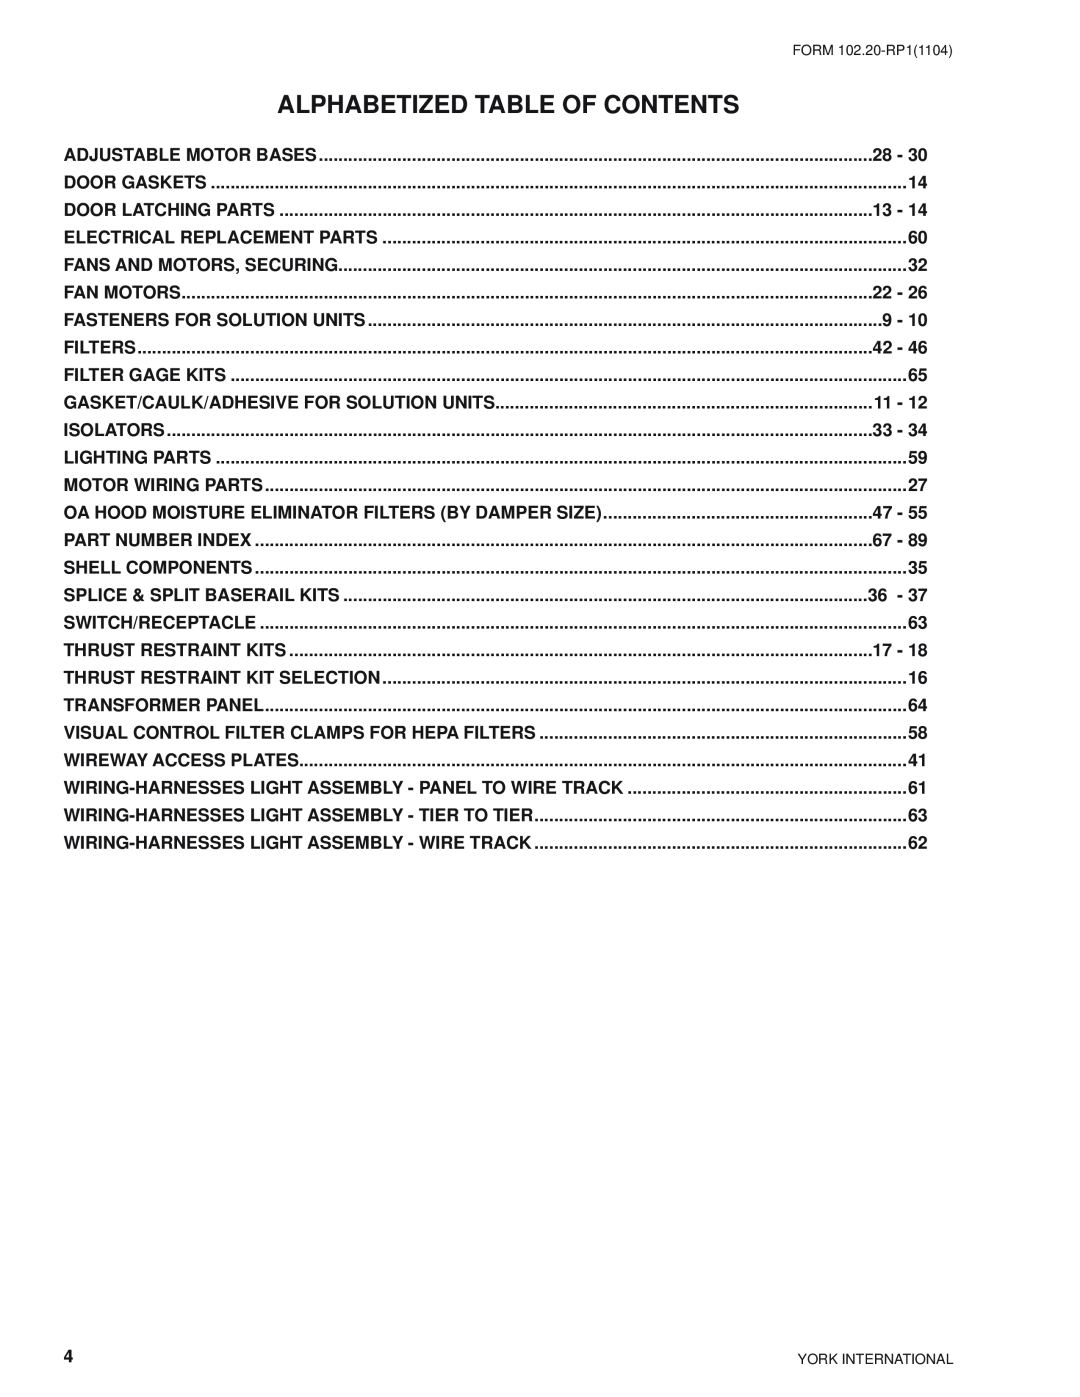 York LDO9688, LDO9624 manual Alphabetized Table Of Contents 